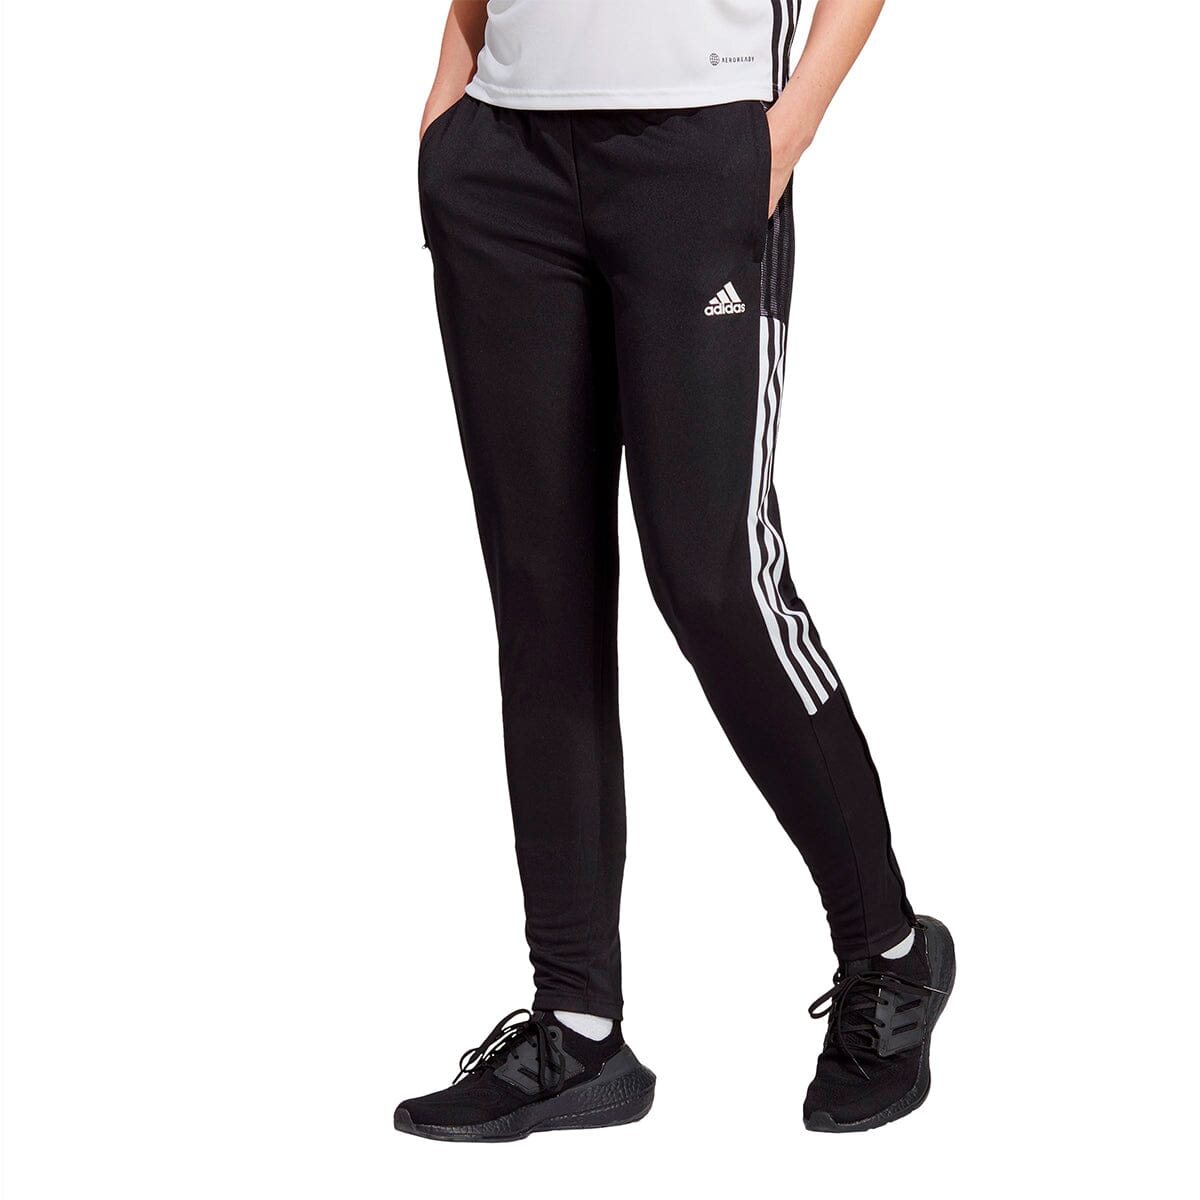 adidas Women's Tiro 21 Track Pants, Training, Soccer, Regular Fit, Tapered